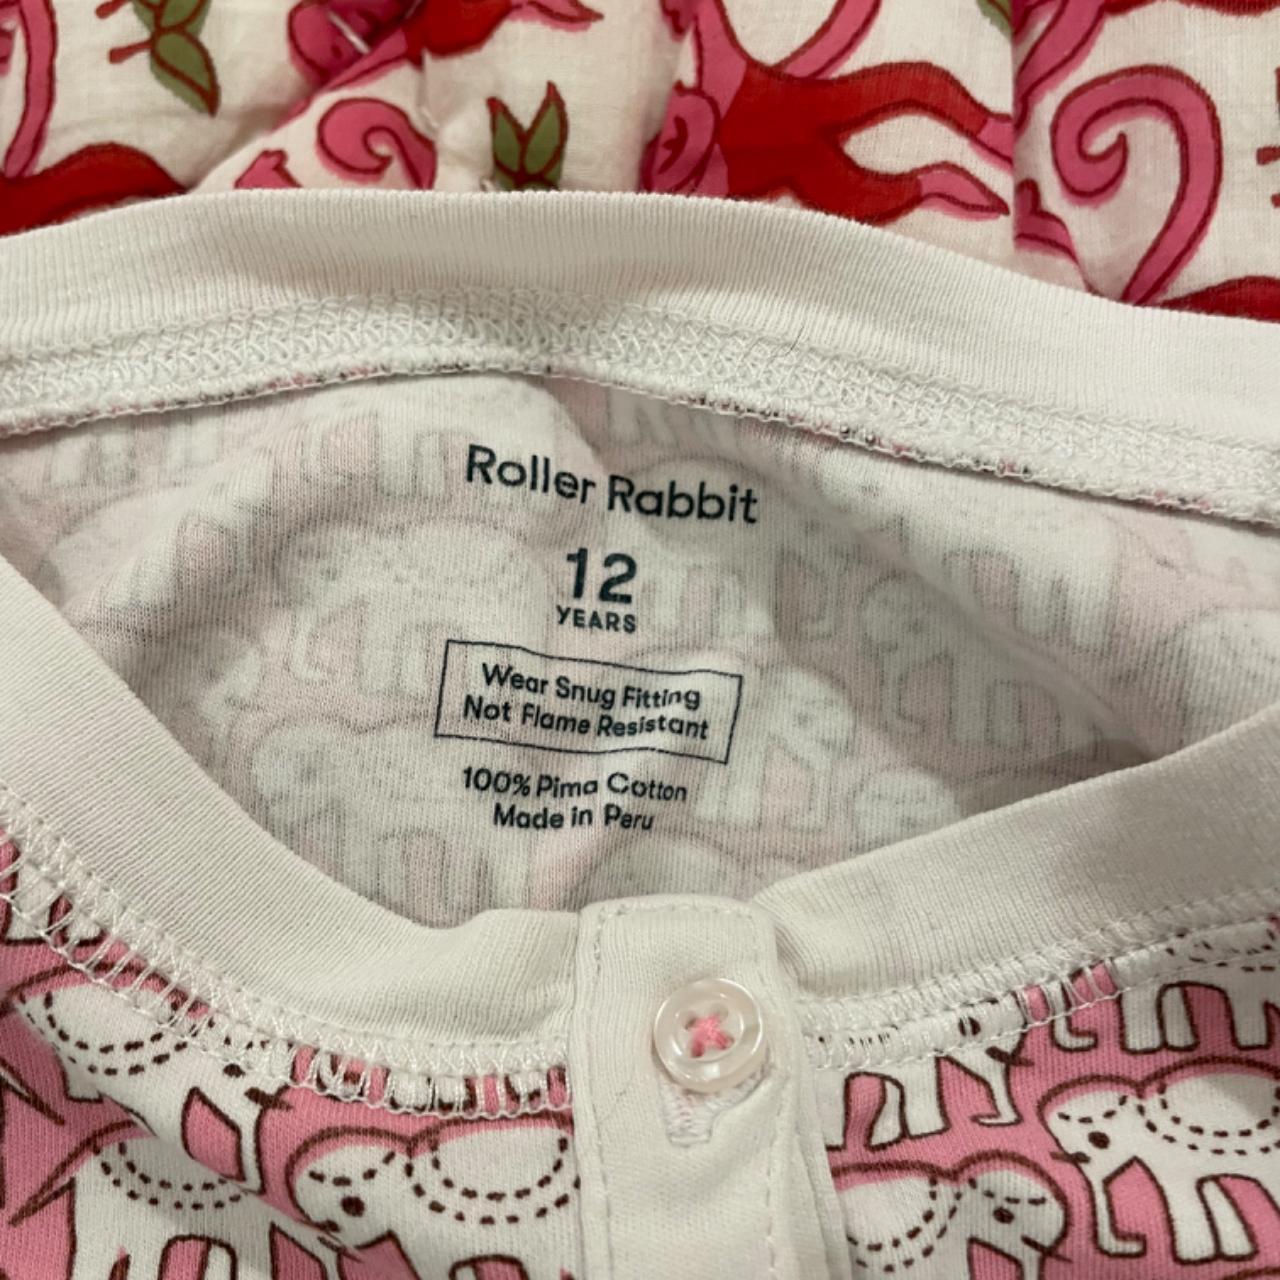 Roller rabbit pink elephant pajamas Size 12 kids No... - Depop